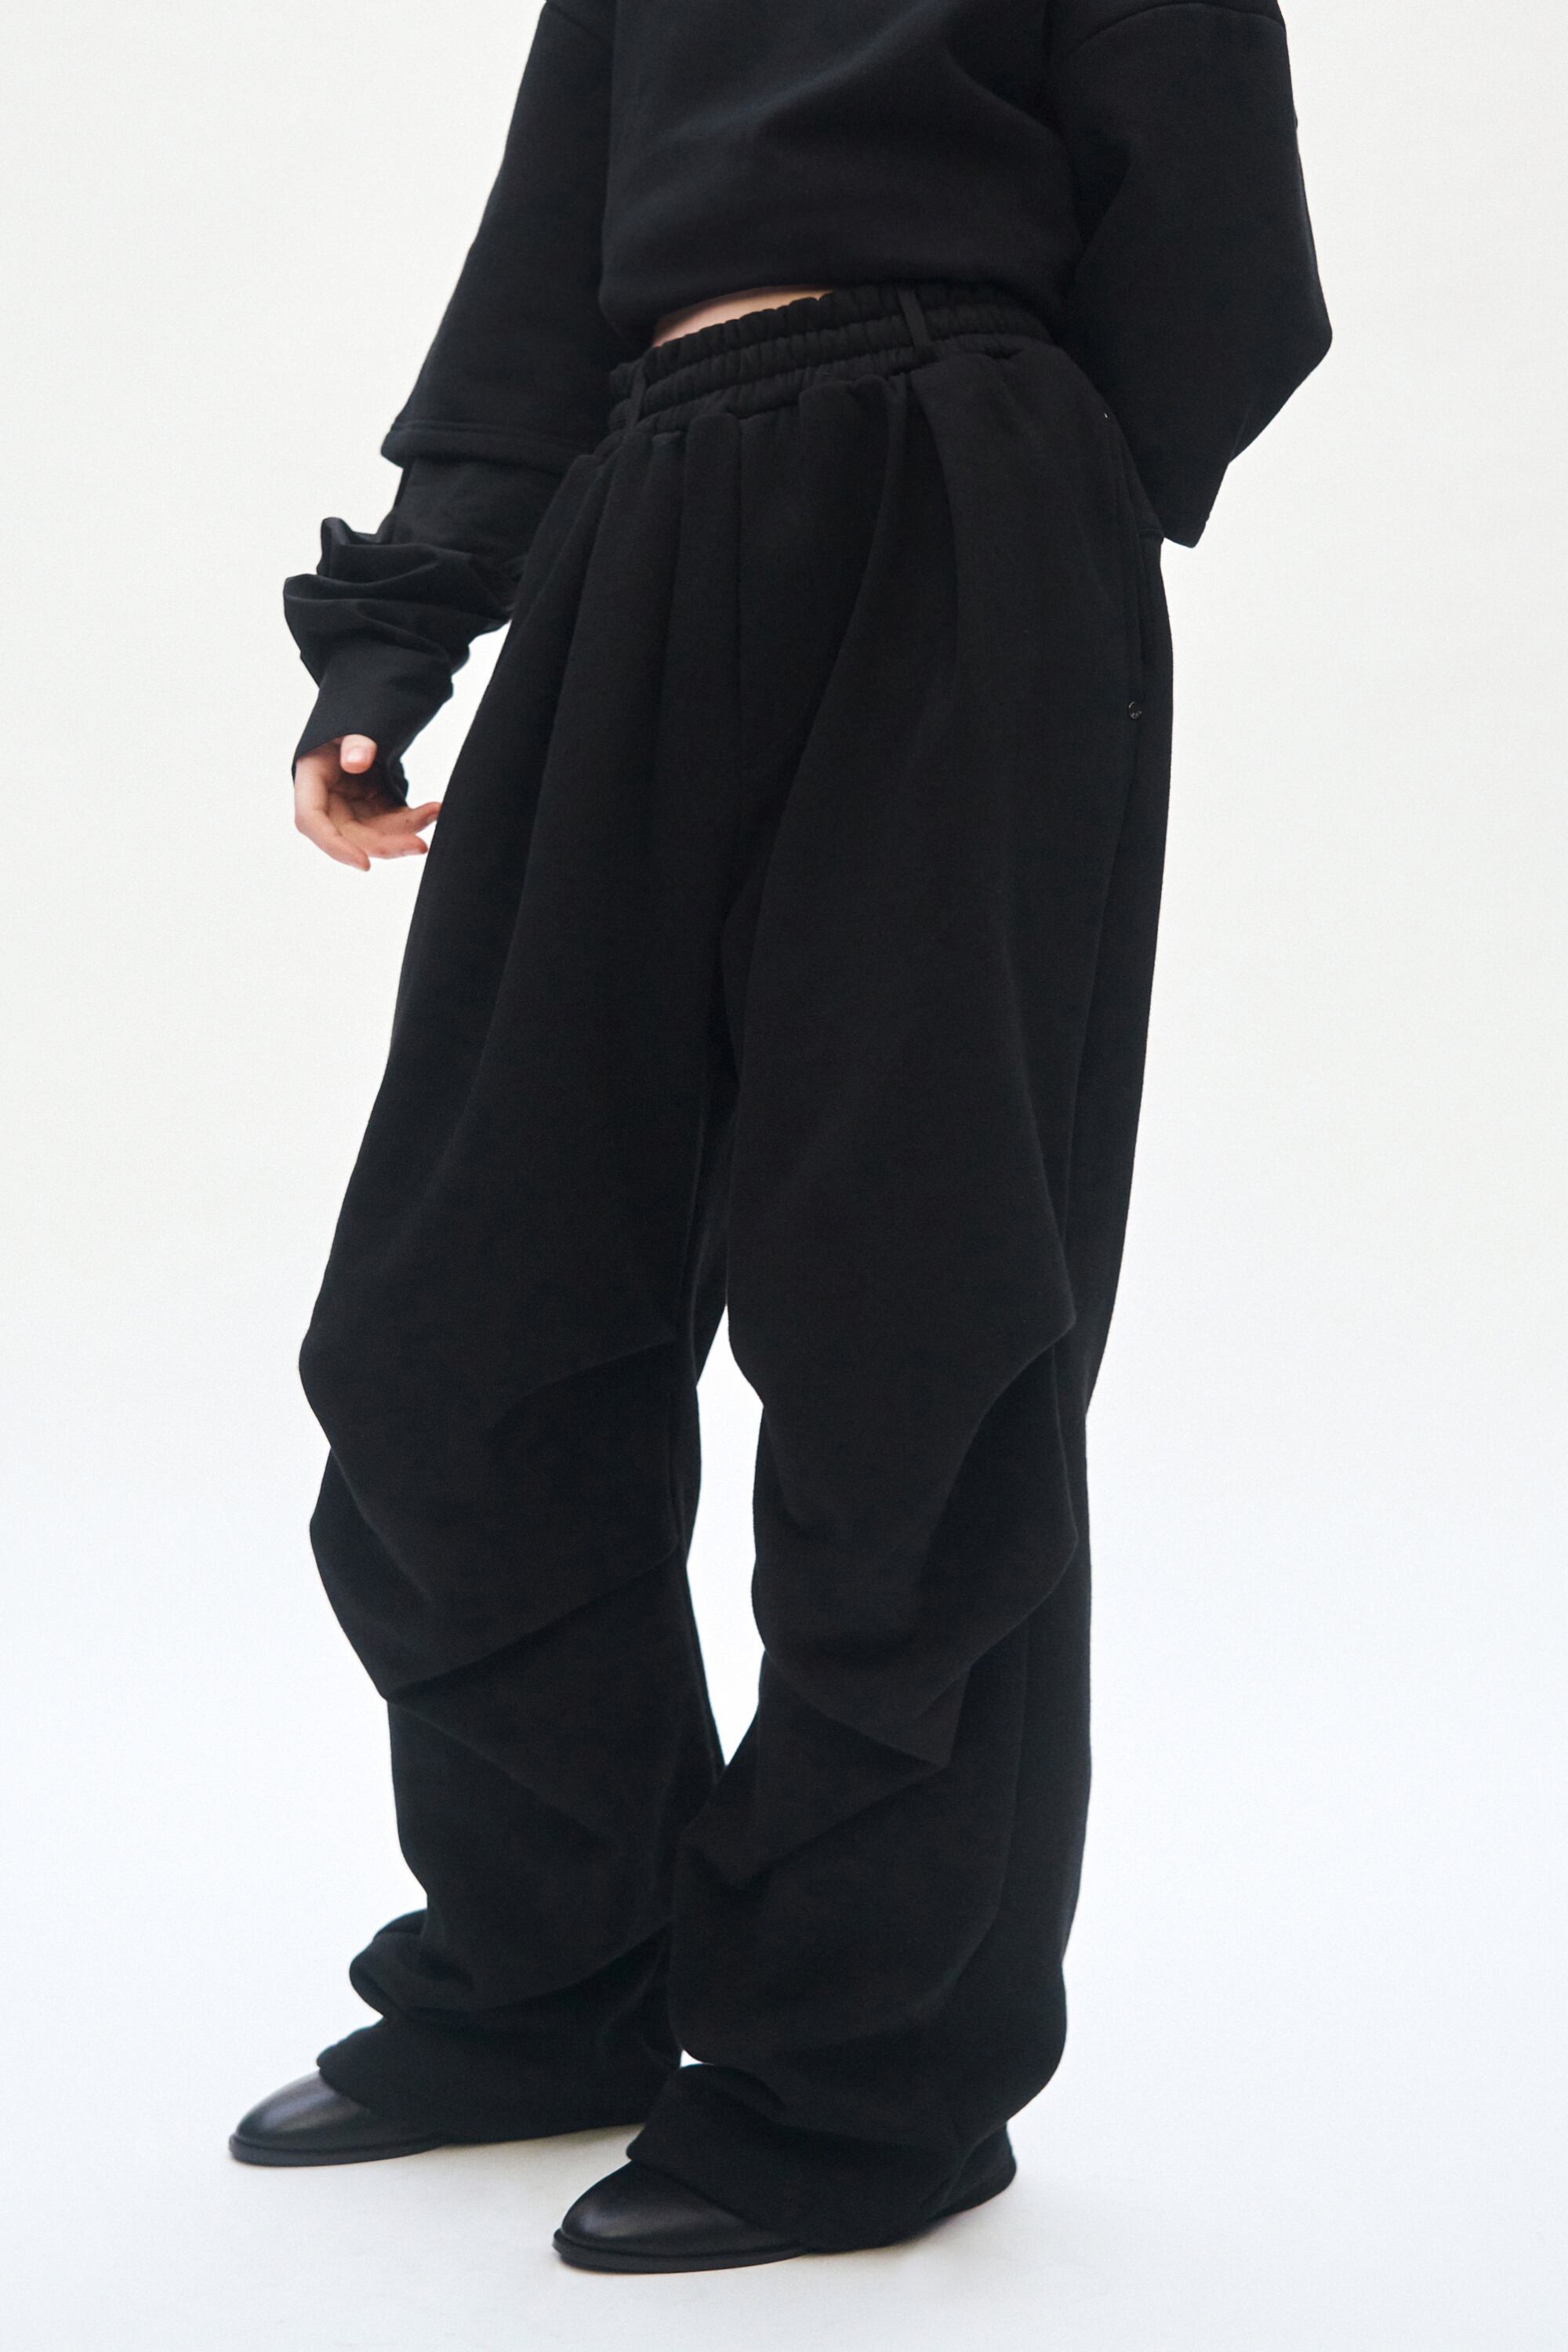 [TREEMINGBIRD] Rivet Sweat Set-up Pants [ Black ] 正規品 韓国ブランド 韓国通販 韓国代行  韓国ファッション TRMNGBD tmb TREEMING BIRD | BONZ (韓国ブランド 代行) powered by BASE